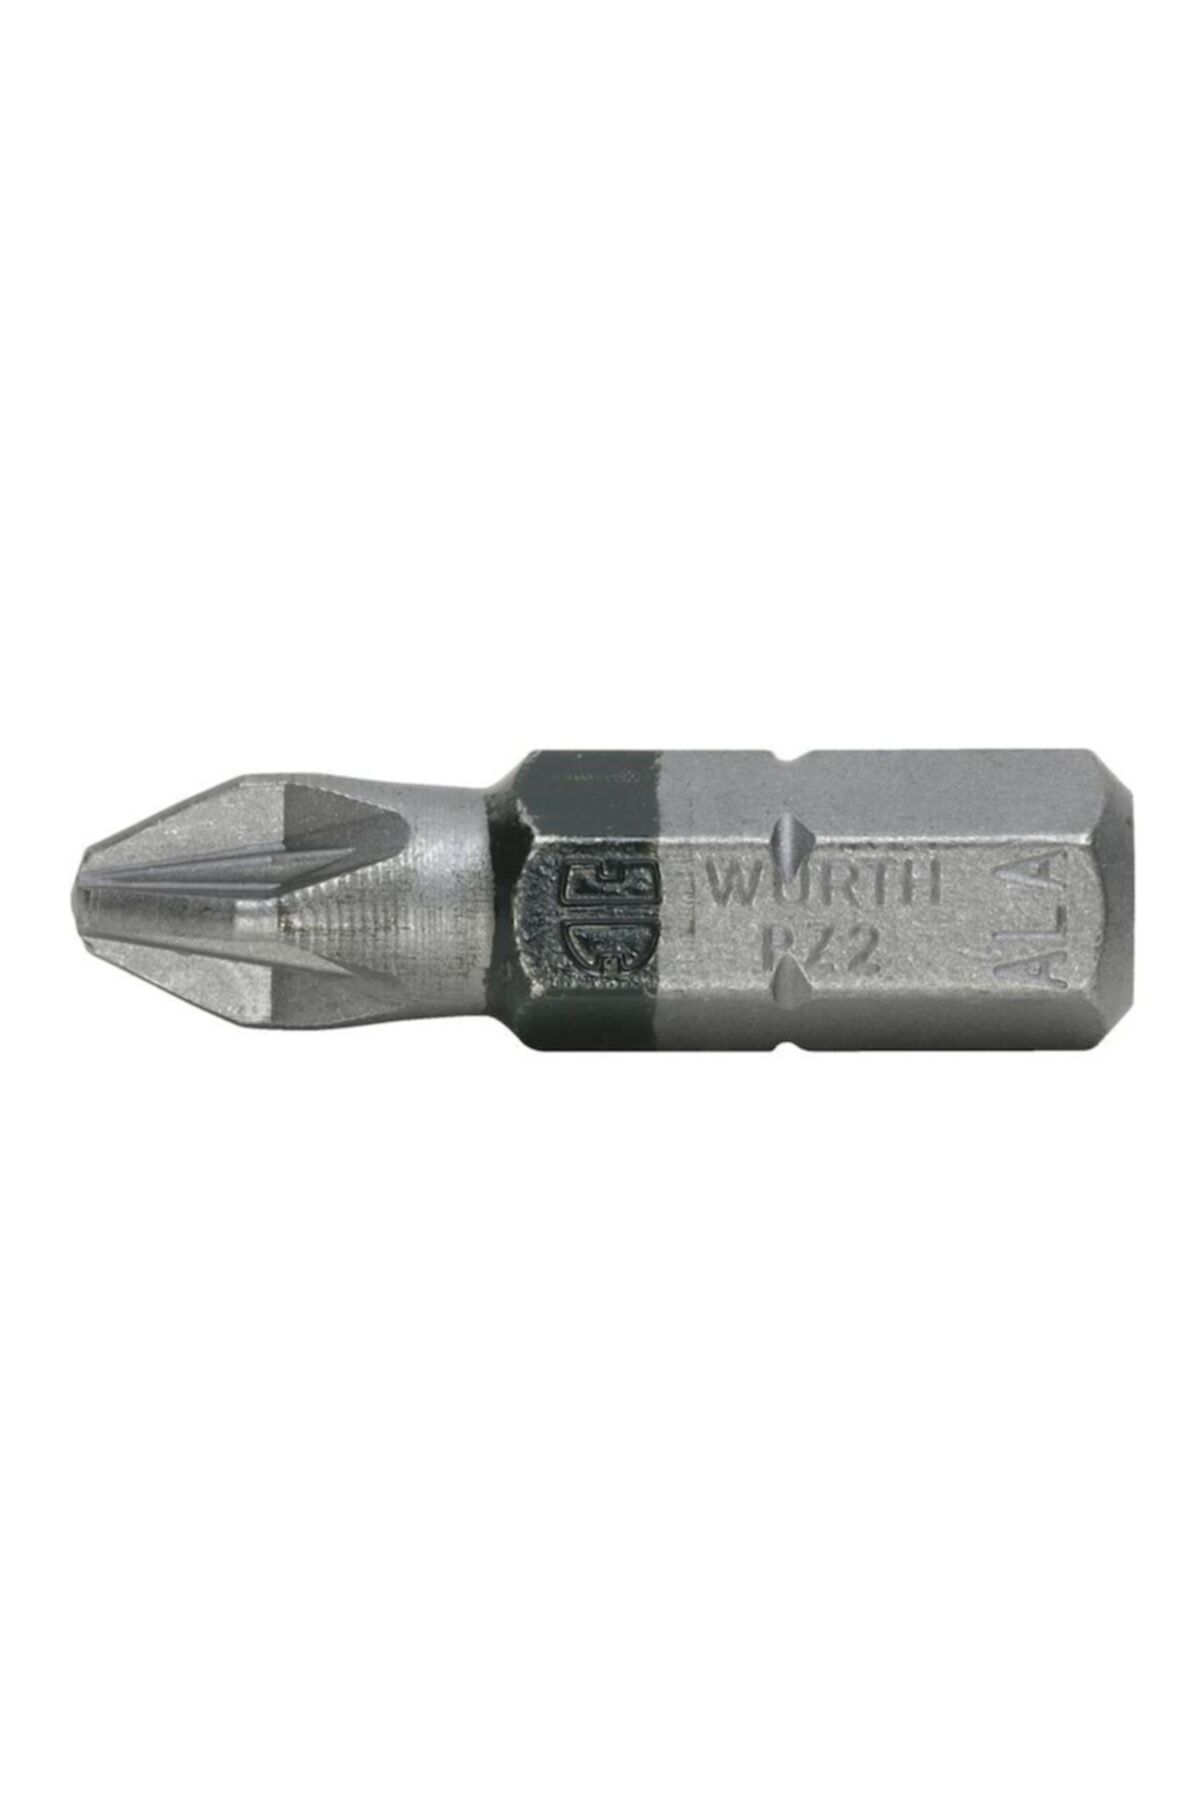 Würth Bits Uç-pz2-1/4ı-25mm 3 Adet